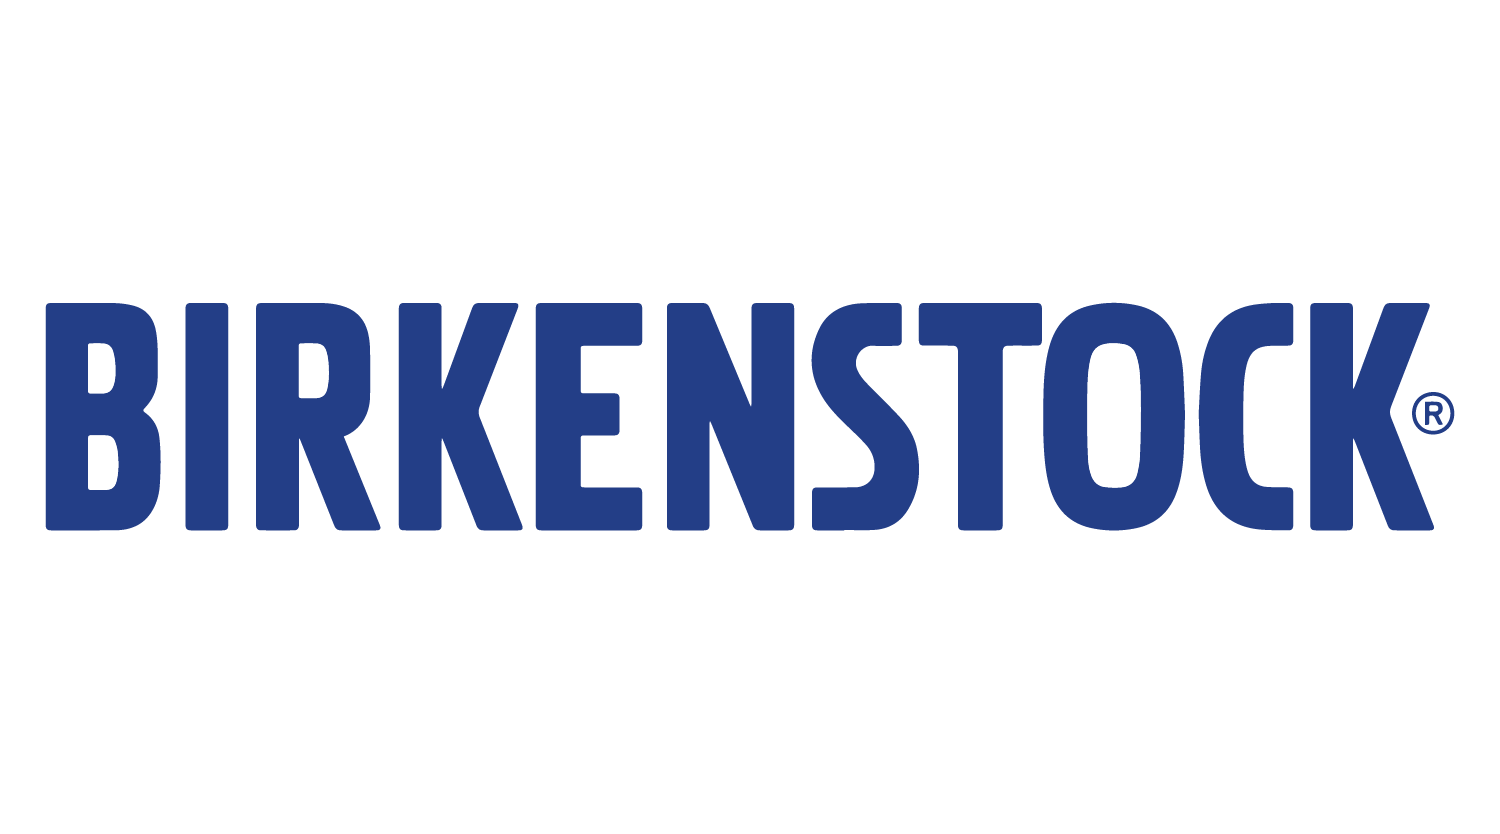 birkenstock-logo